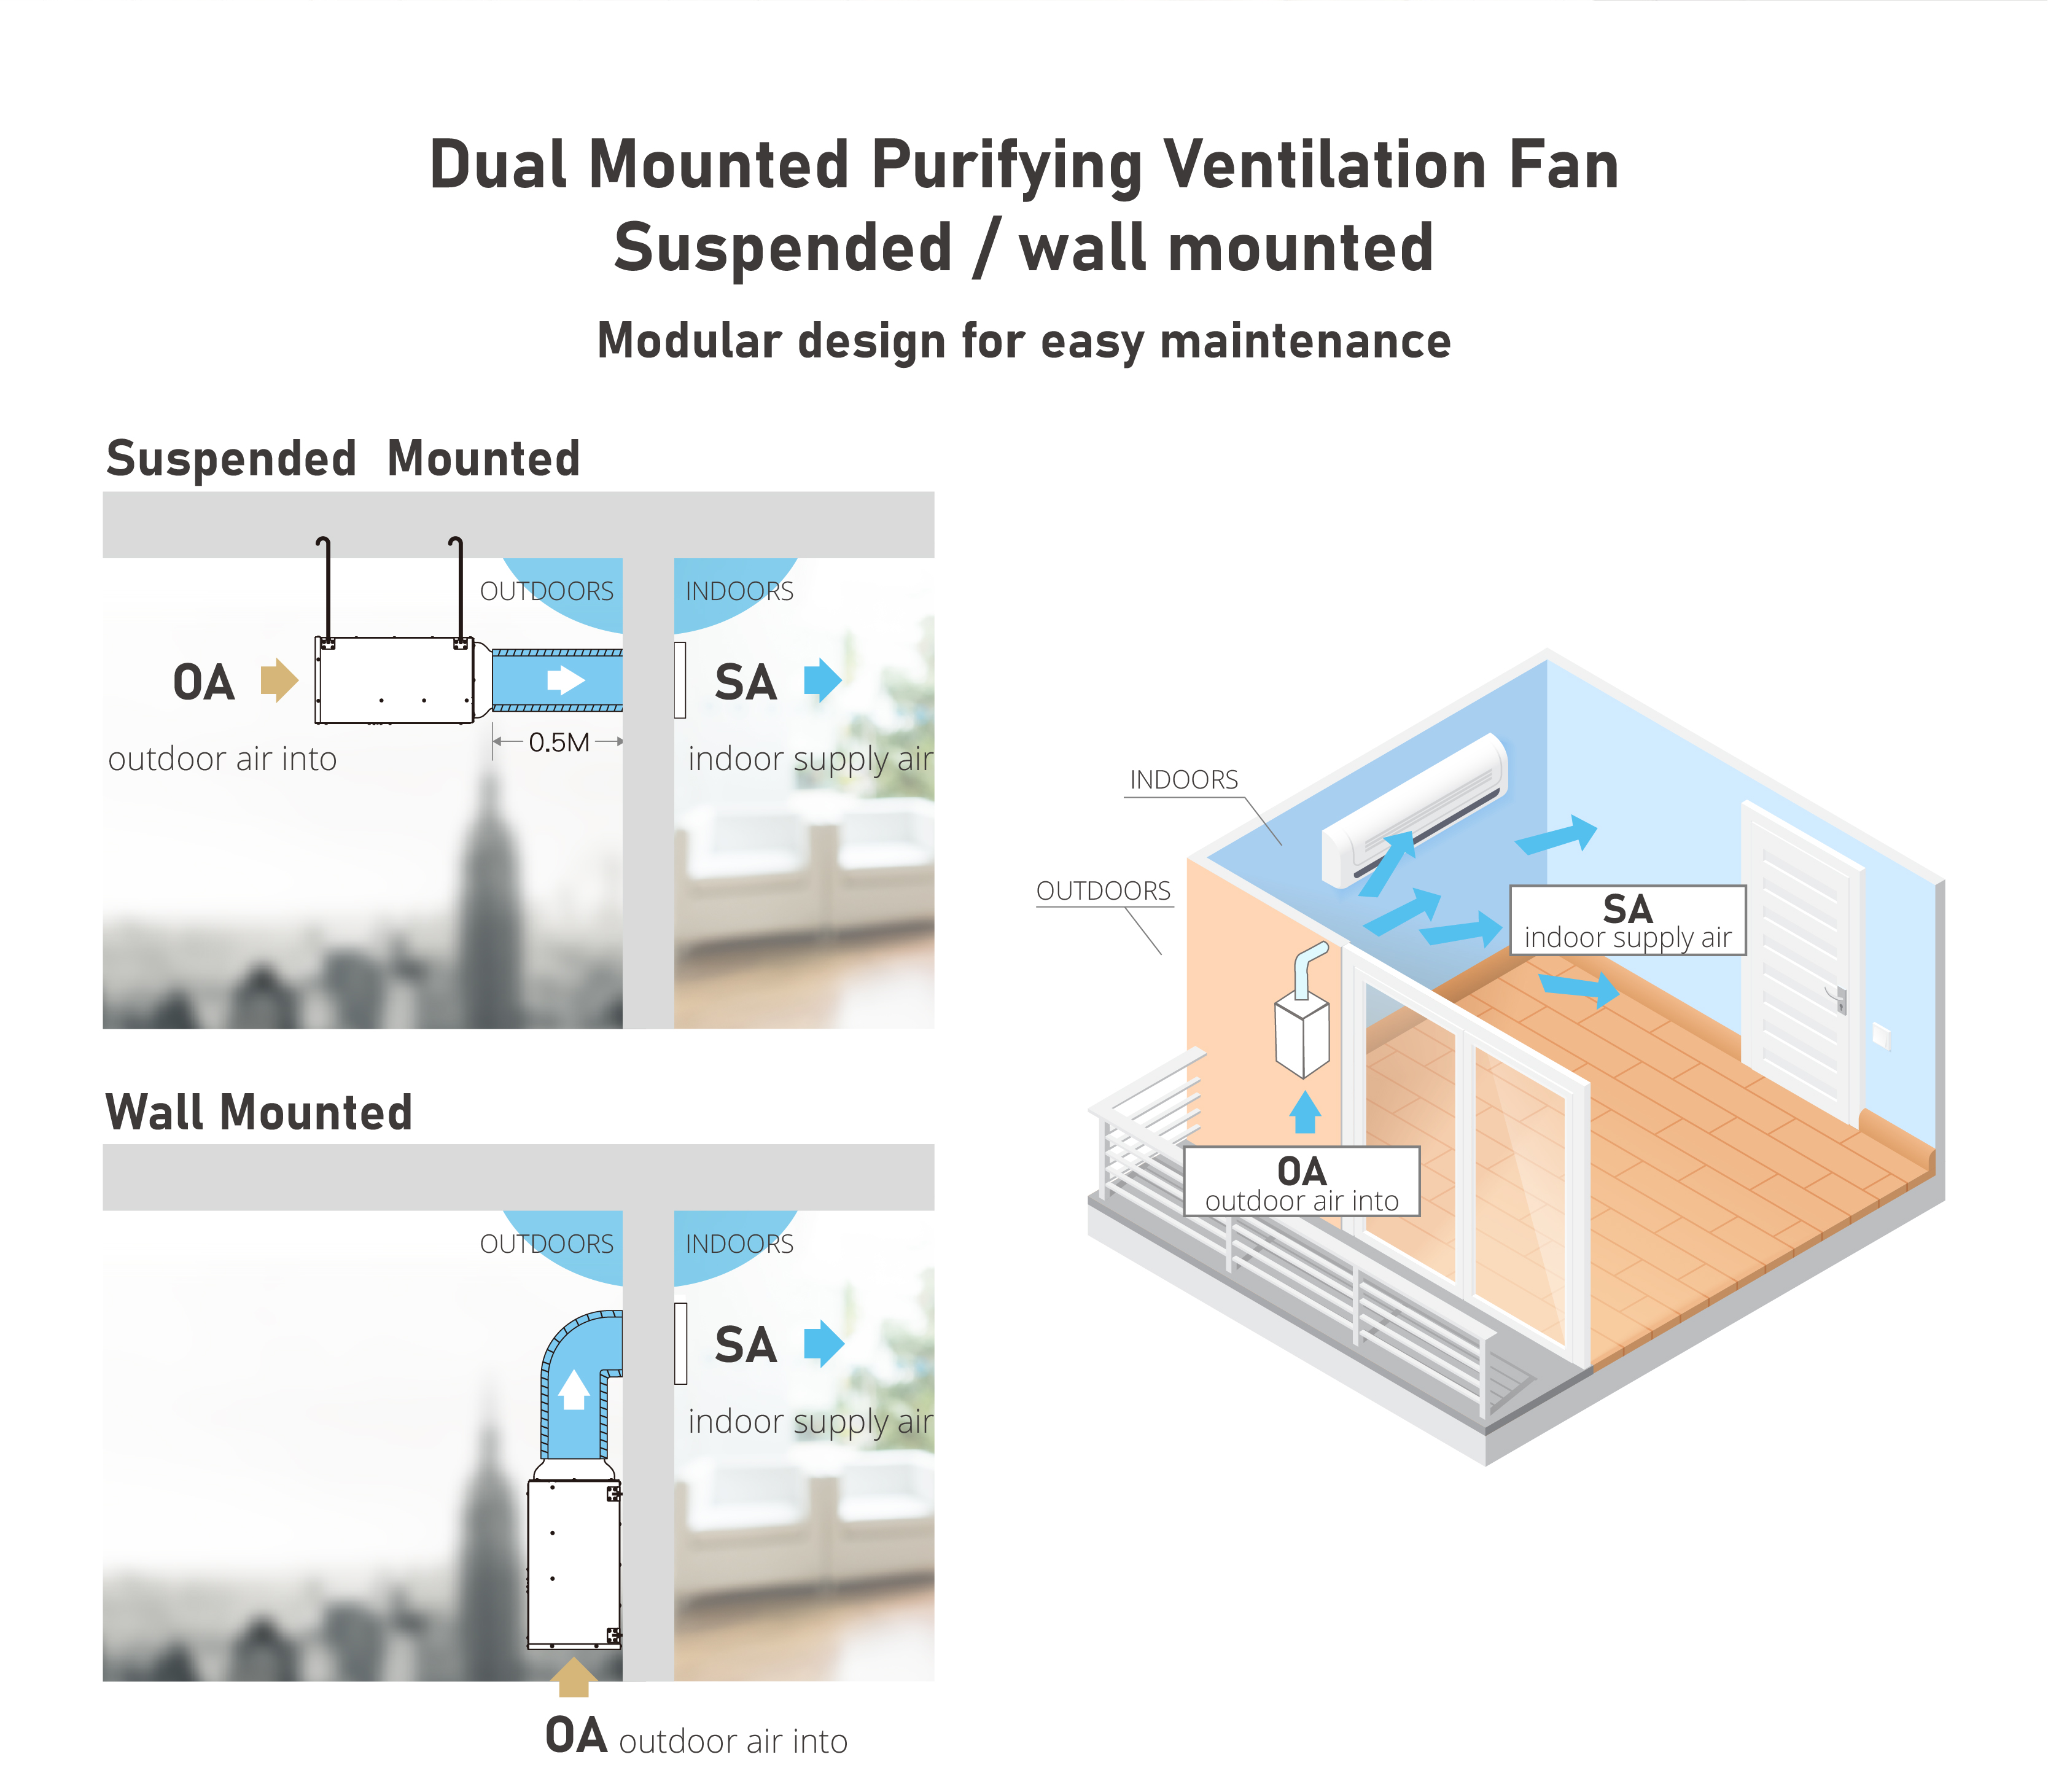 PM2.5 Purifying Ventilation Fan